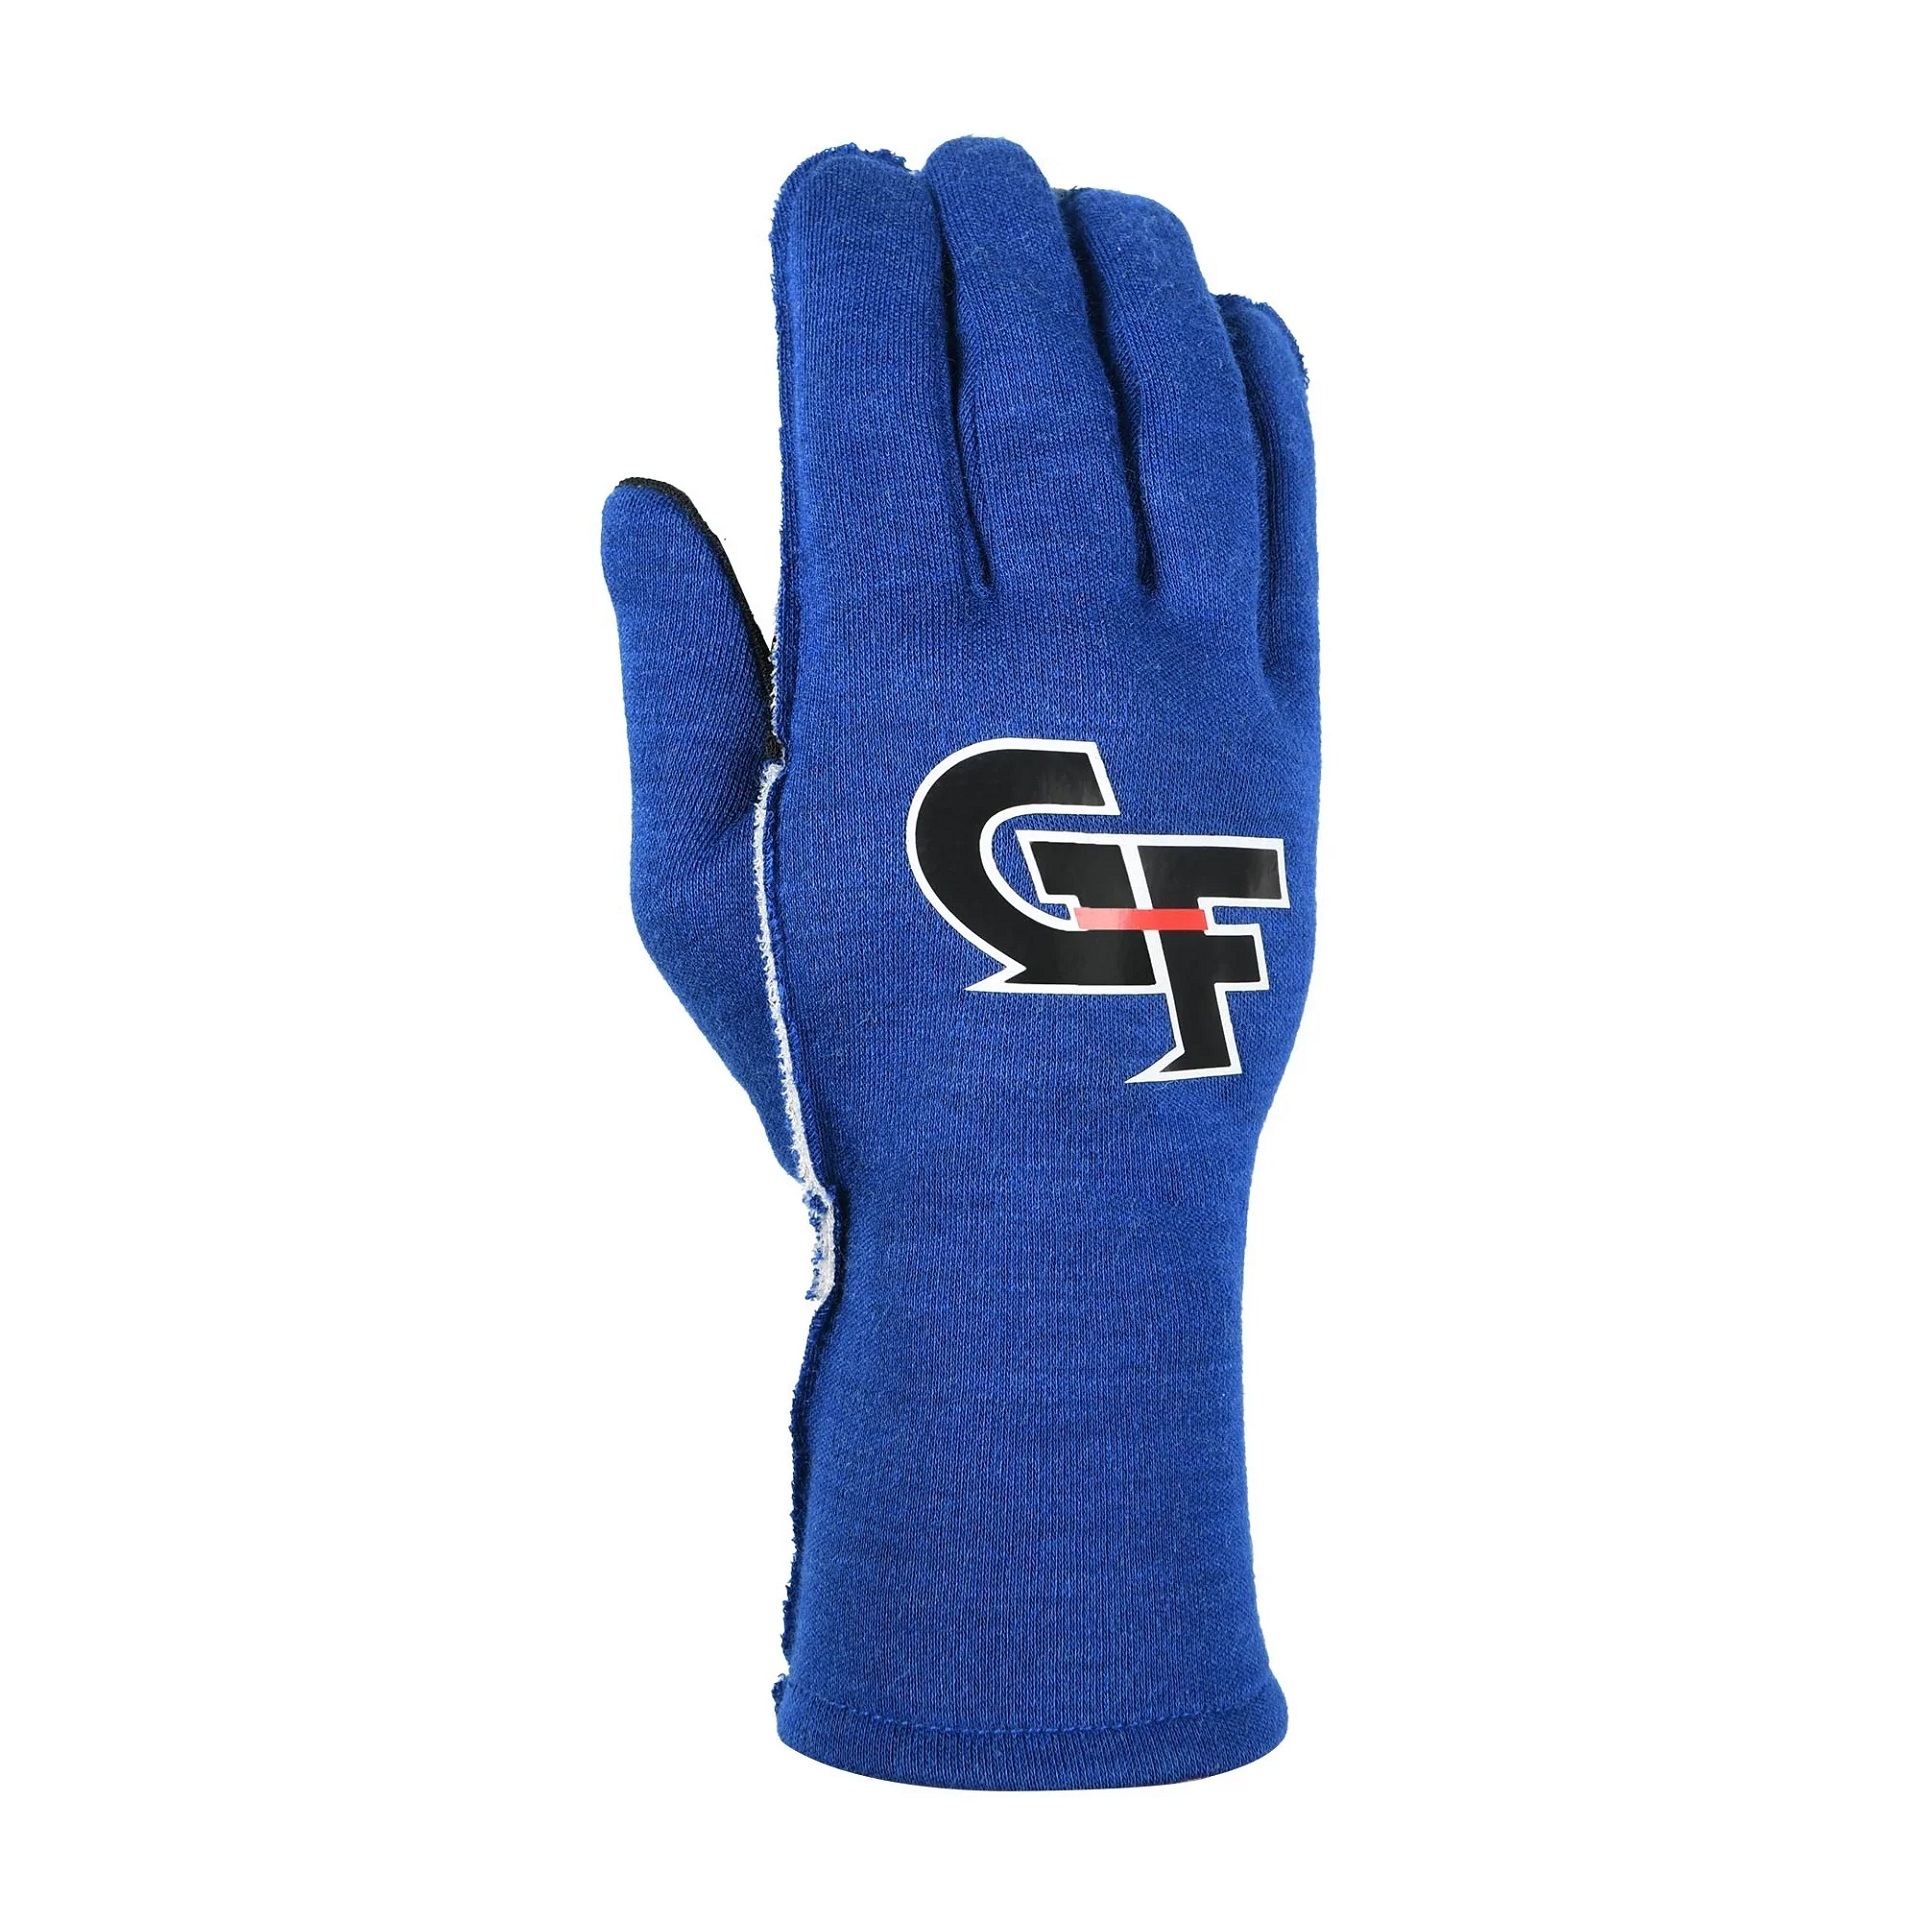 G-FORCE Gloves G-Limit Youth Medium Blue